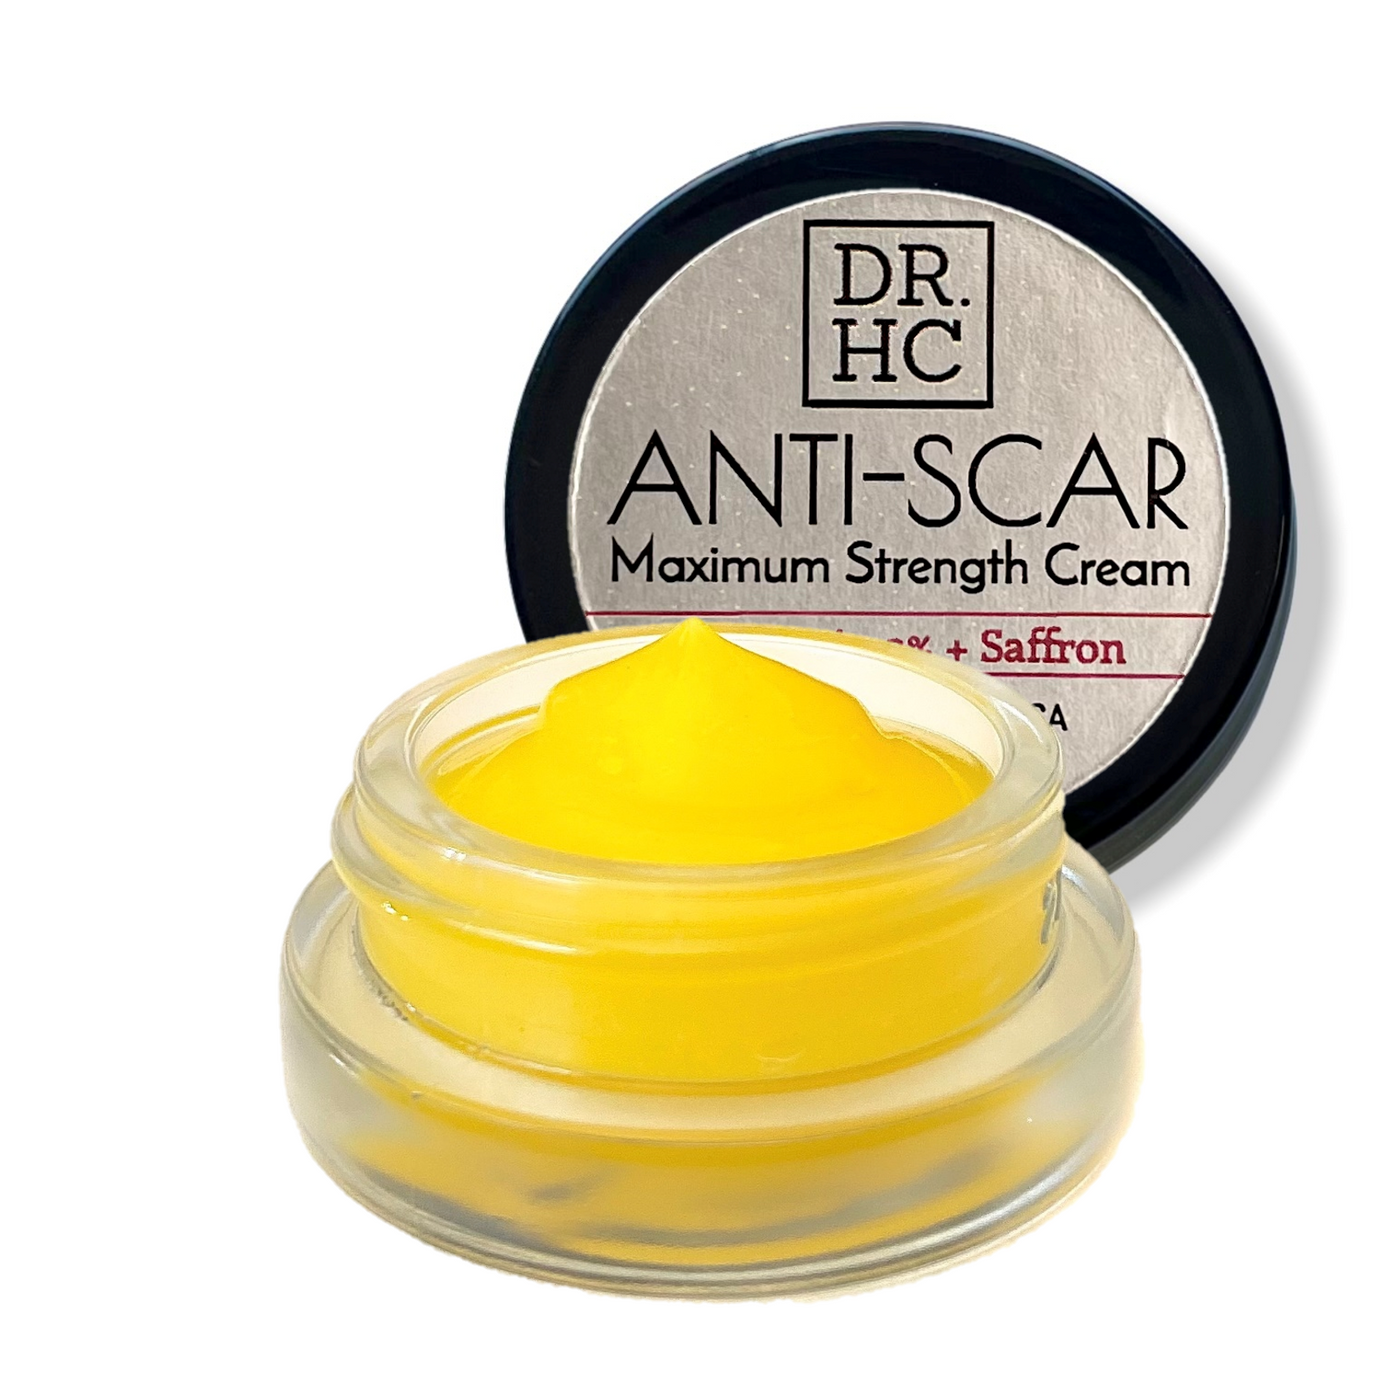 DR.HC Anti-Scar Maximum Strength Cream (10g, 0.35oz.) (Anti-scar, Skin Recovery, Anti-blemish, Anti-inflammatory...)-3